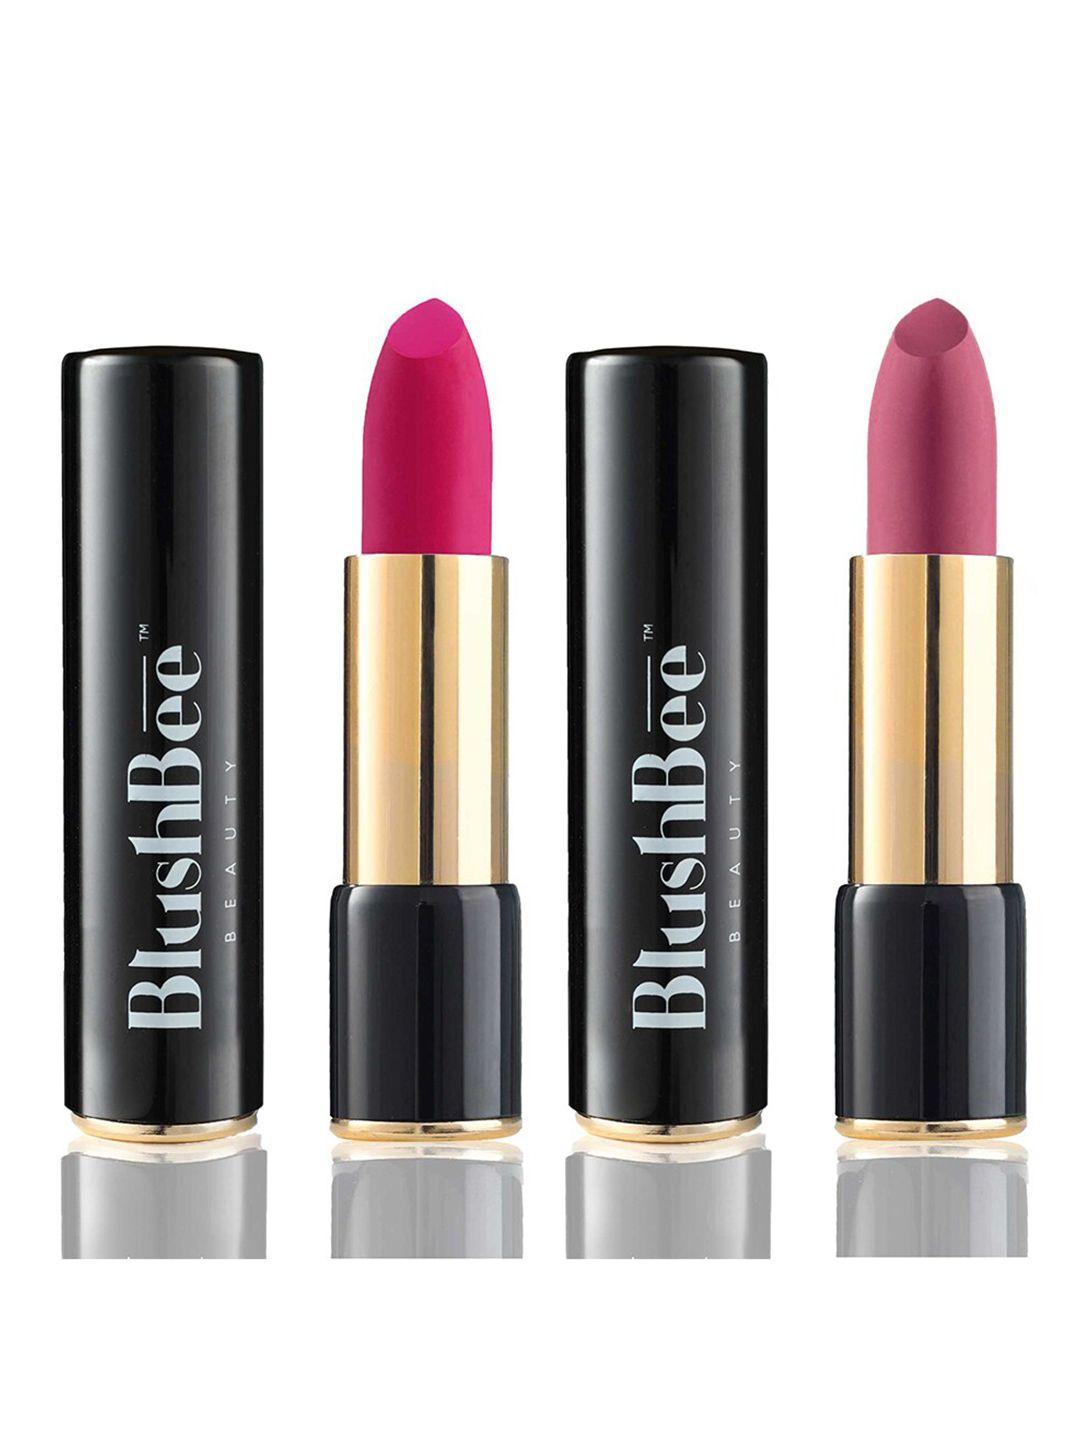 blushbee beauty set of 2 lip nourishing lipsticks - mystic mauve bb04 & velvet rose bb06